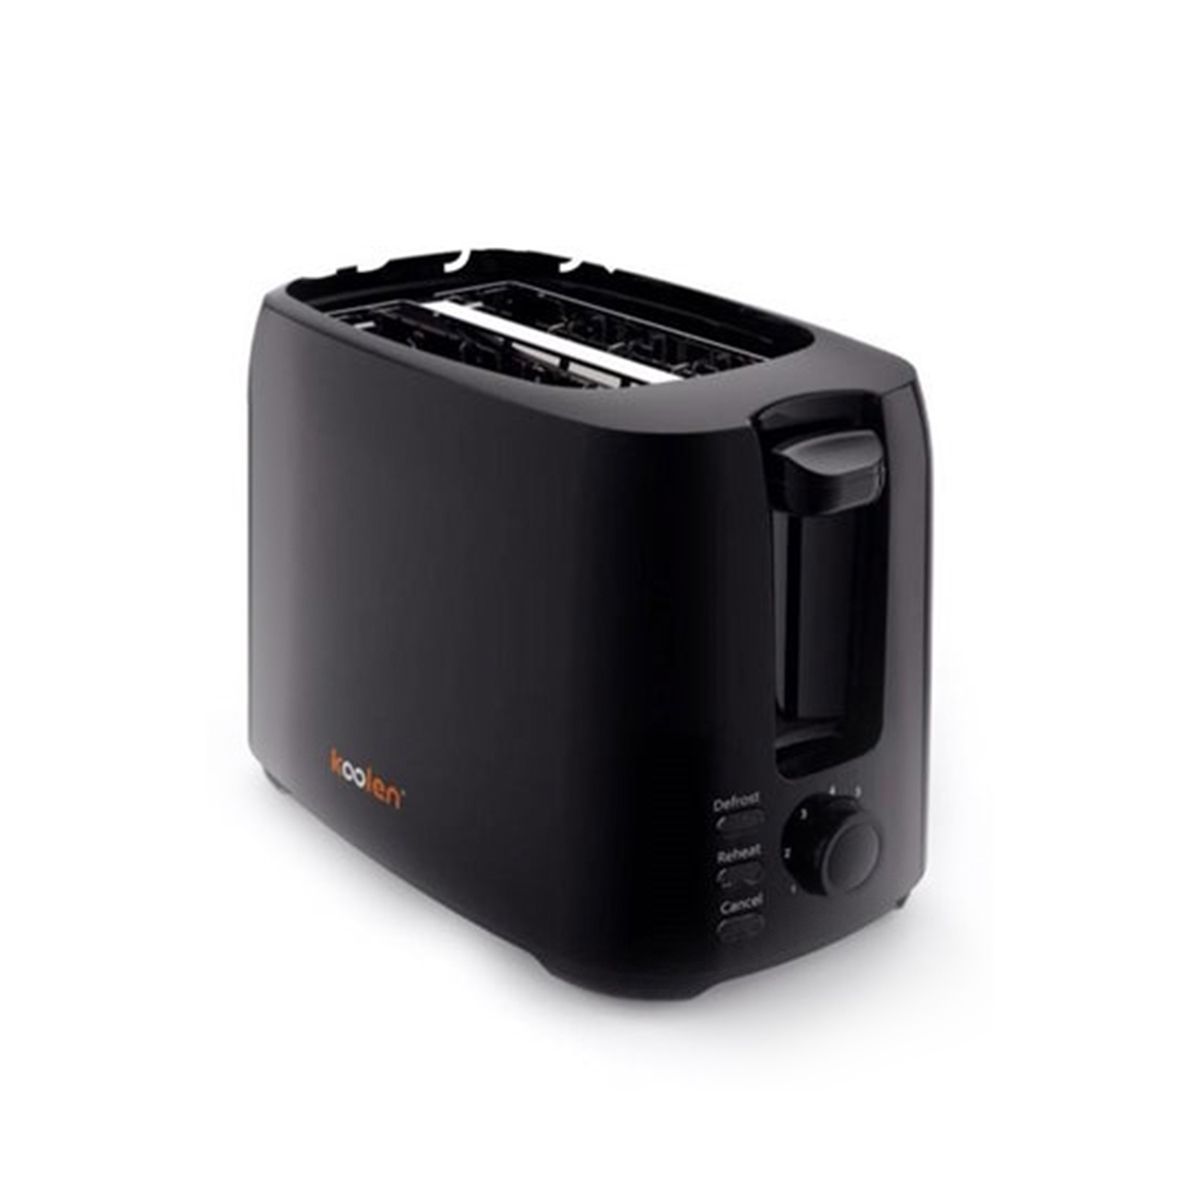 Koolen Double Toaster 750 Watt, Black - 800104001